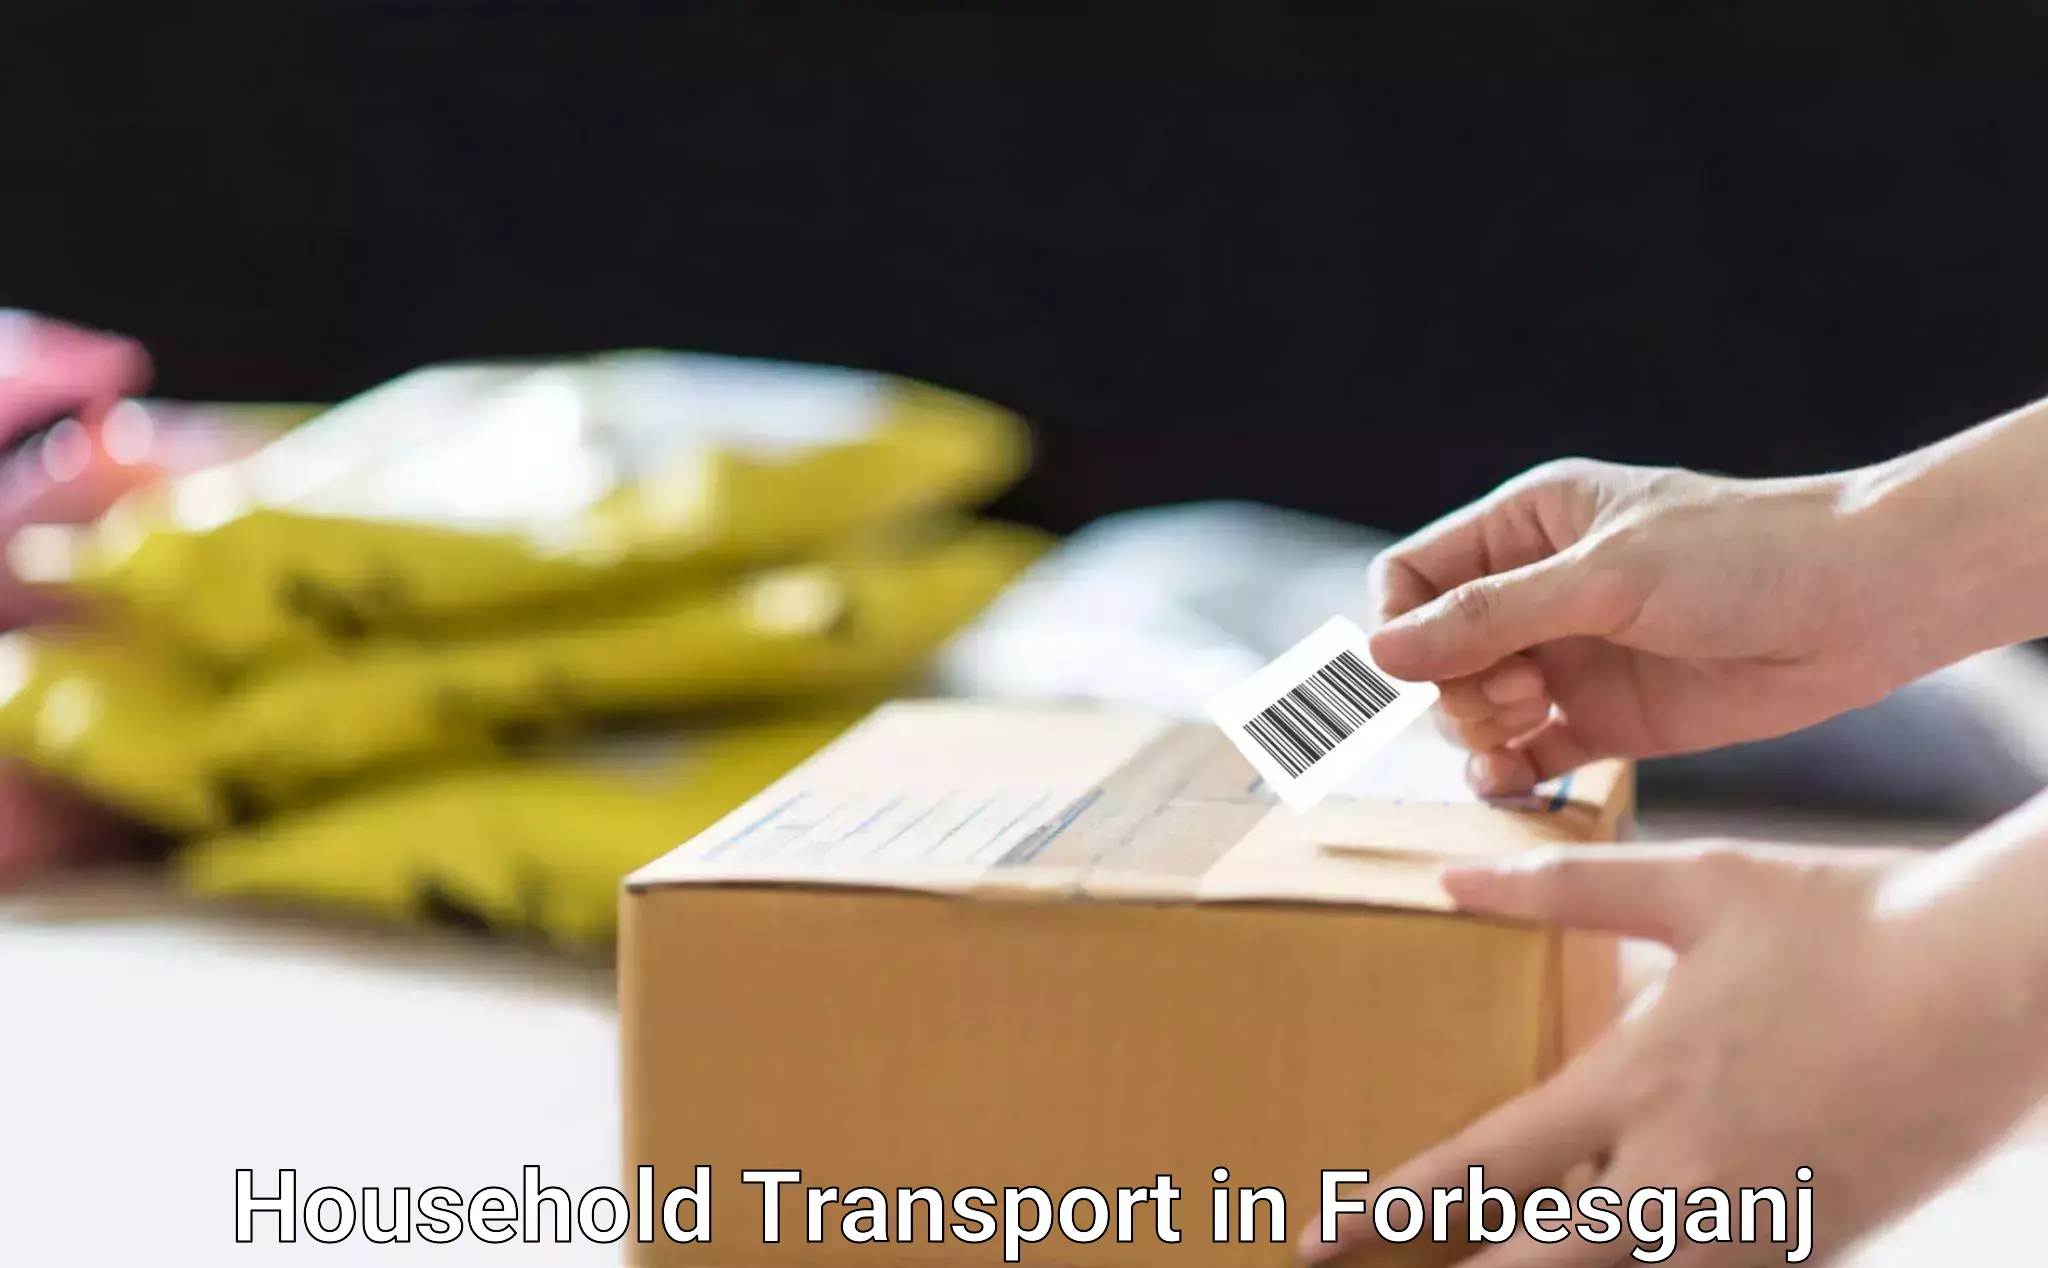 Quality household transport in Forbesganj